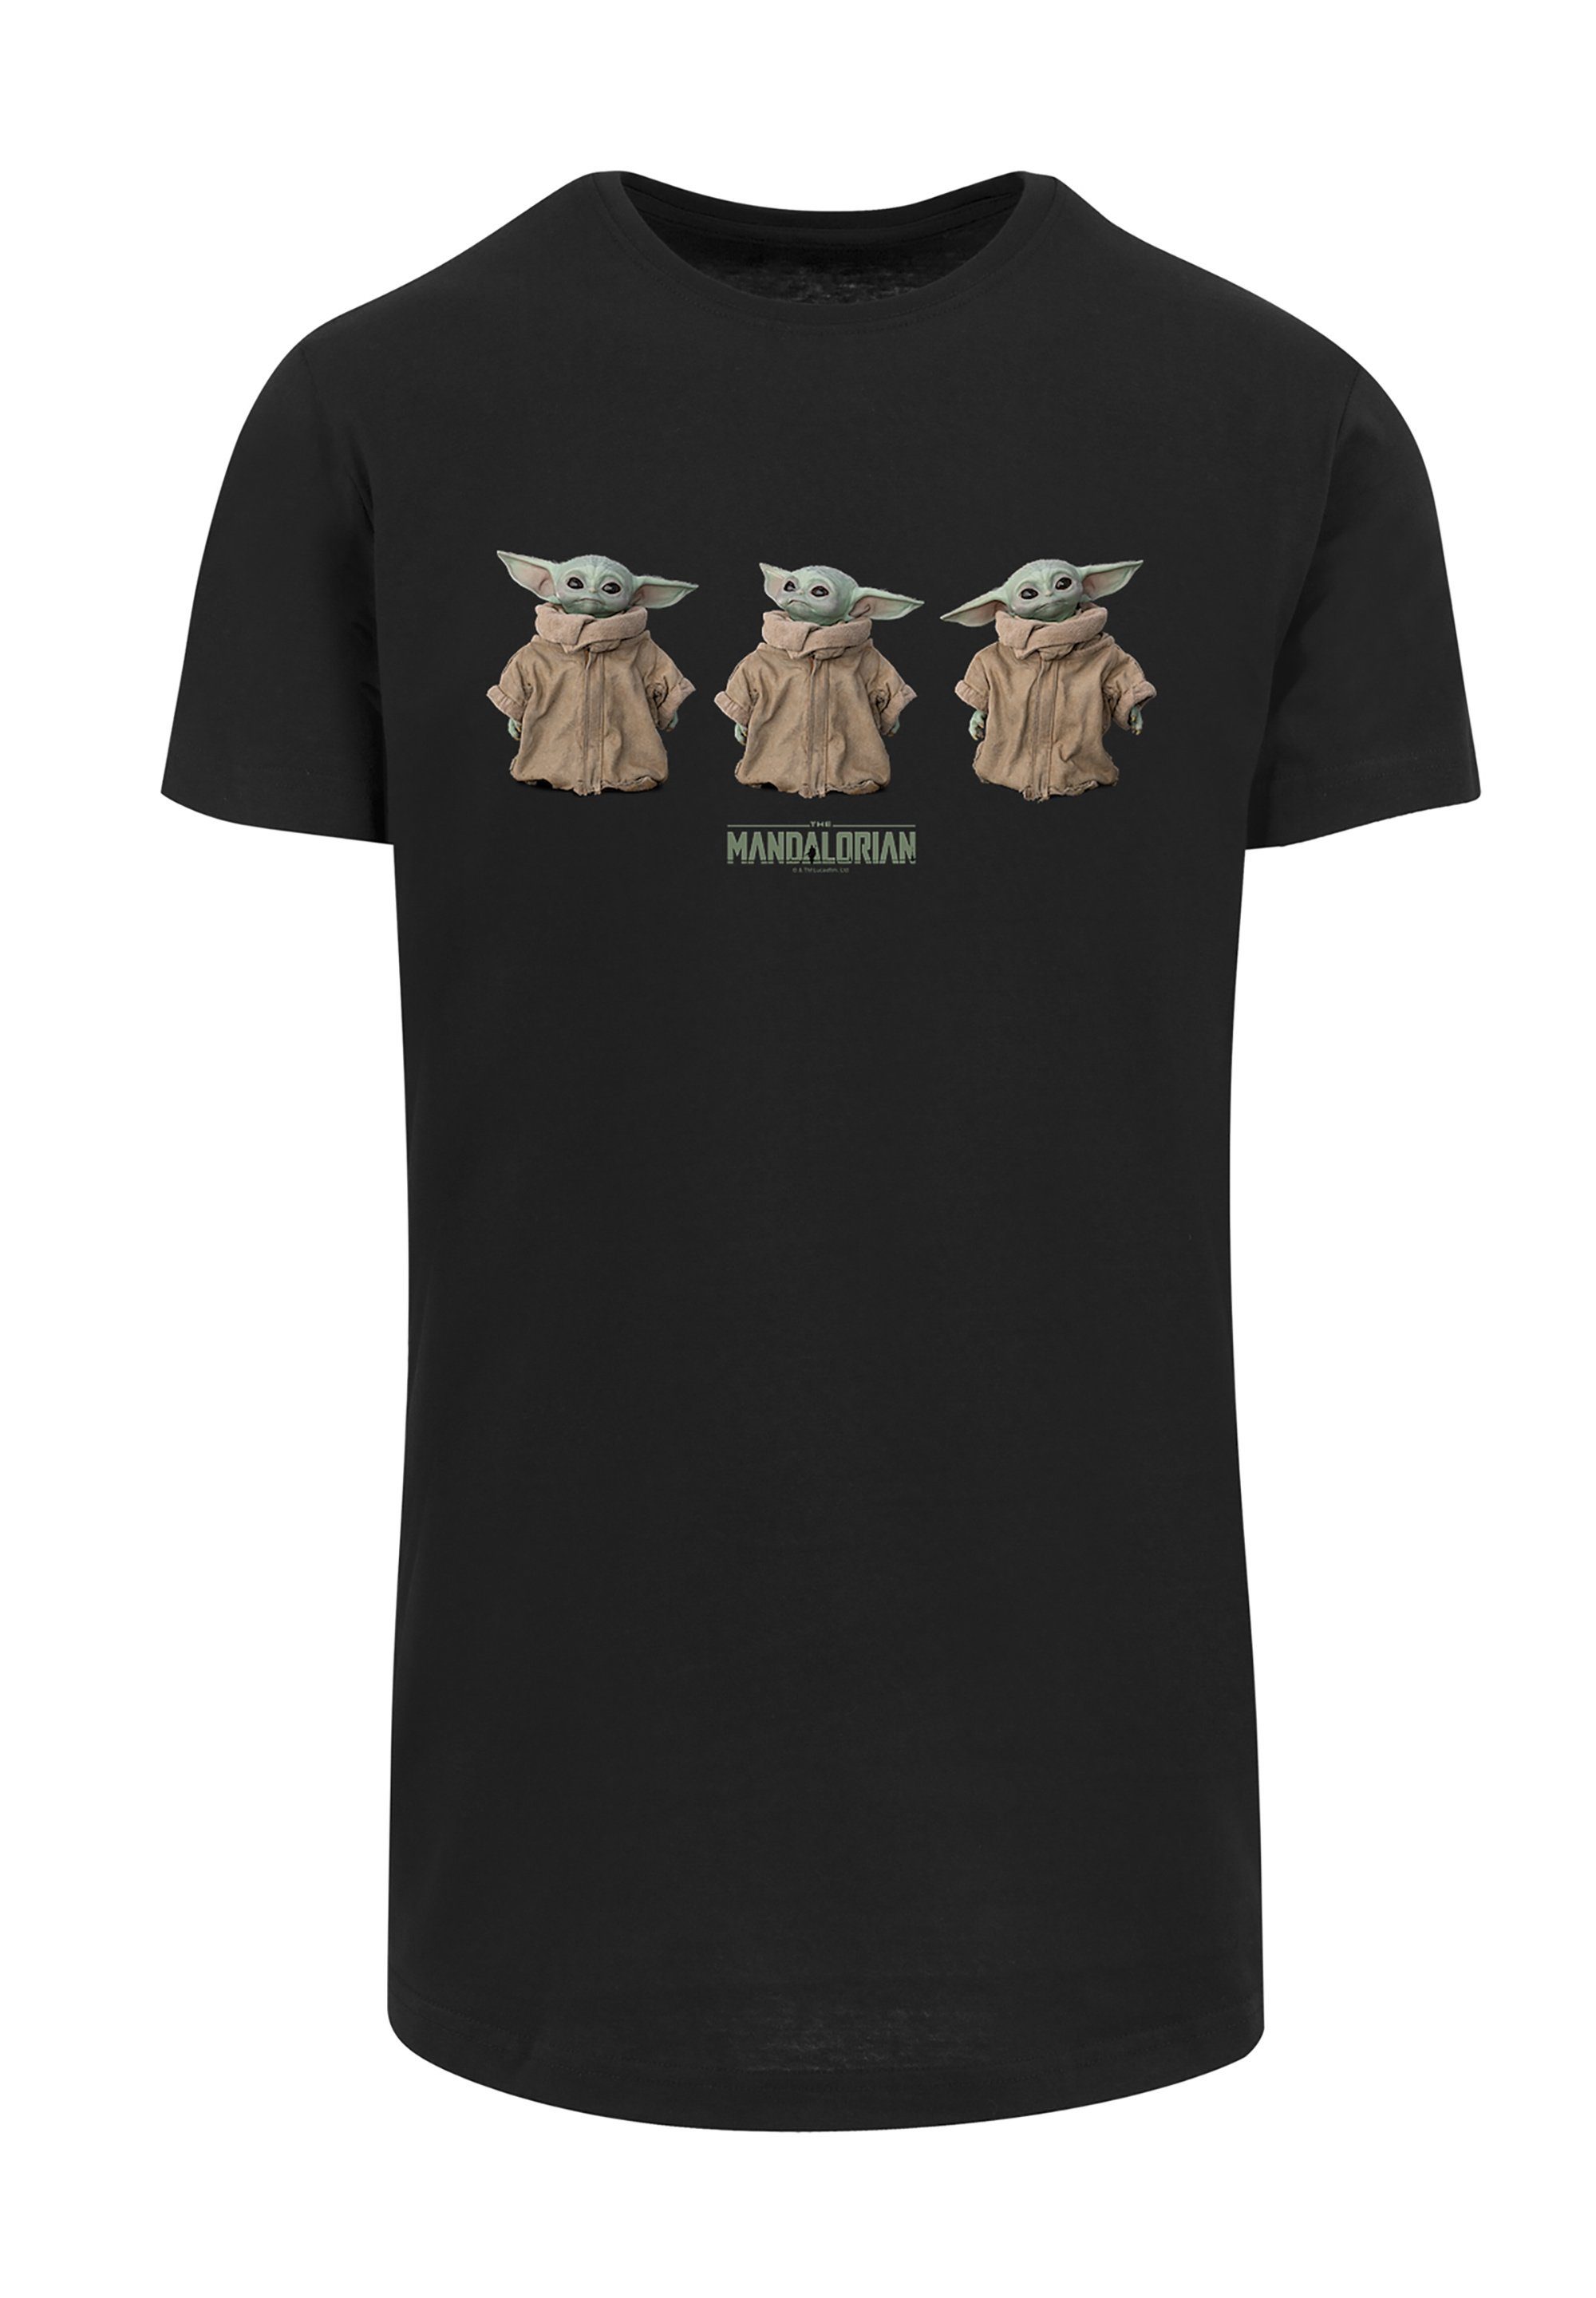 F4NT4STIC T-Shirt Star Wars Mandalorian Print Baby Yoda schwarz The